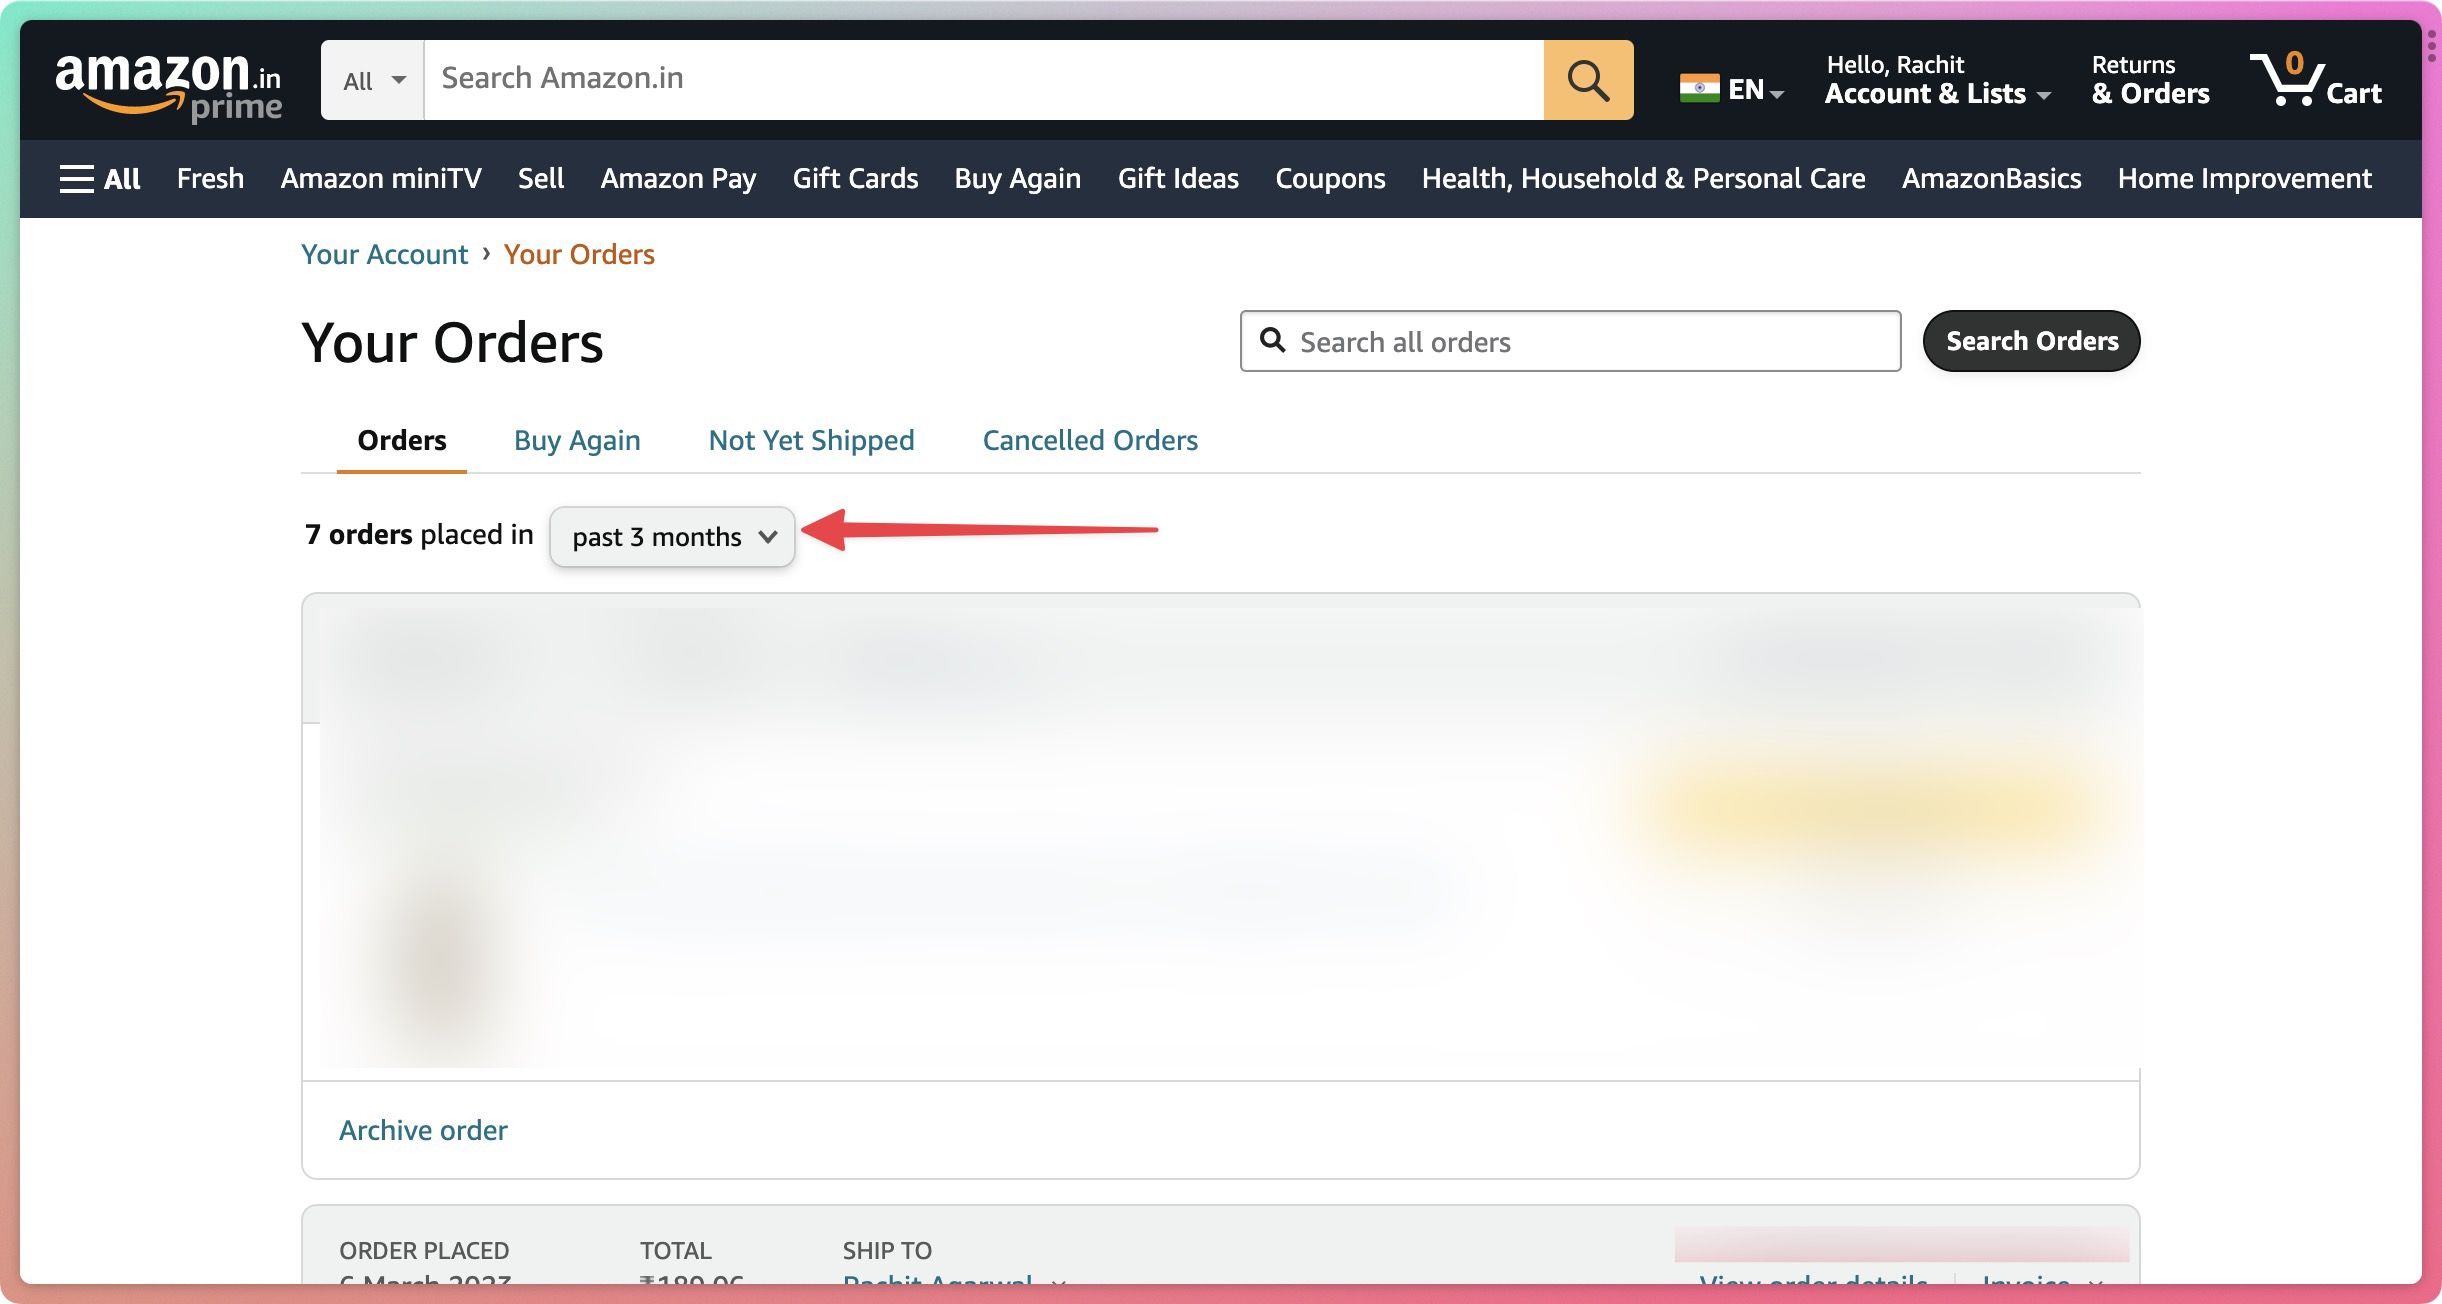 Captura de tela mostrando o pedido feito nos últimos 3 meses no site da Amazon